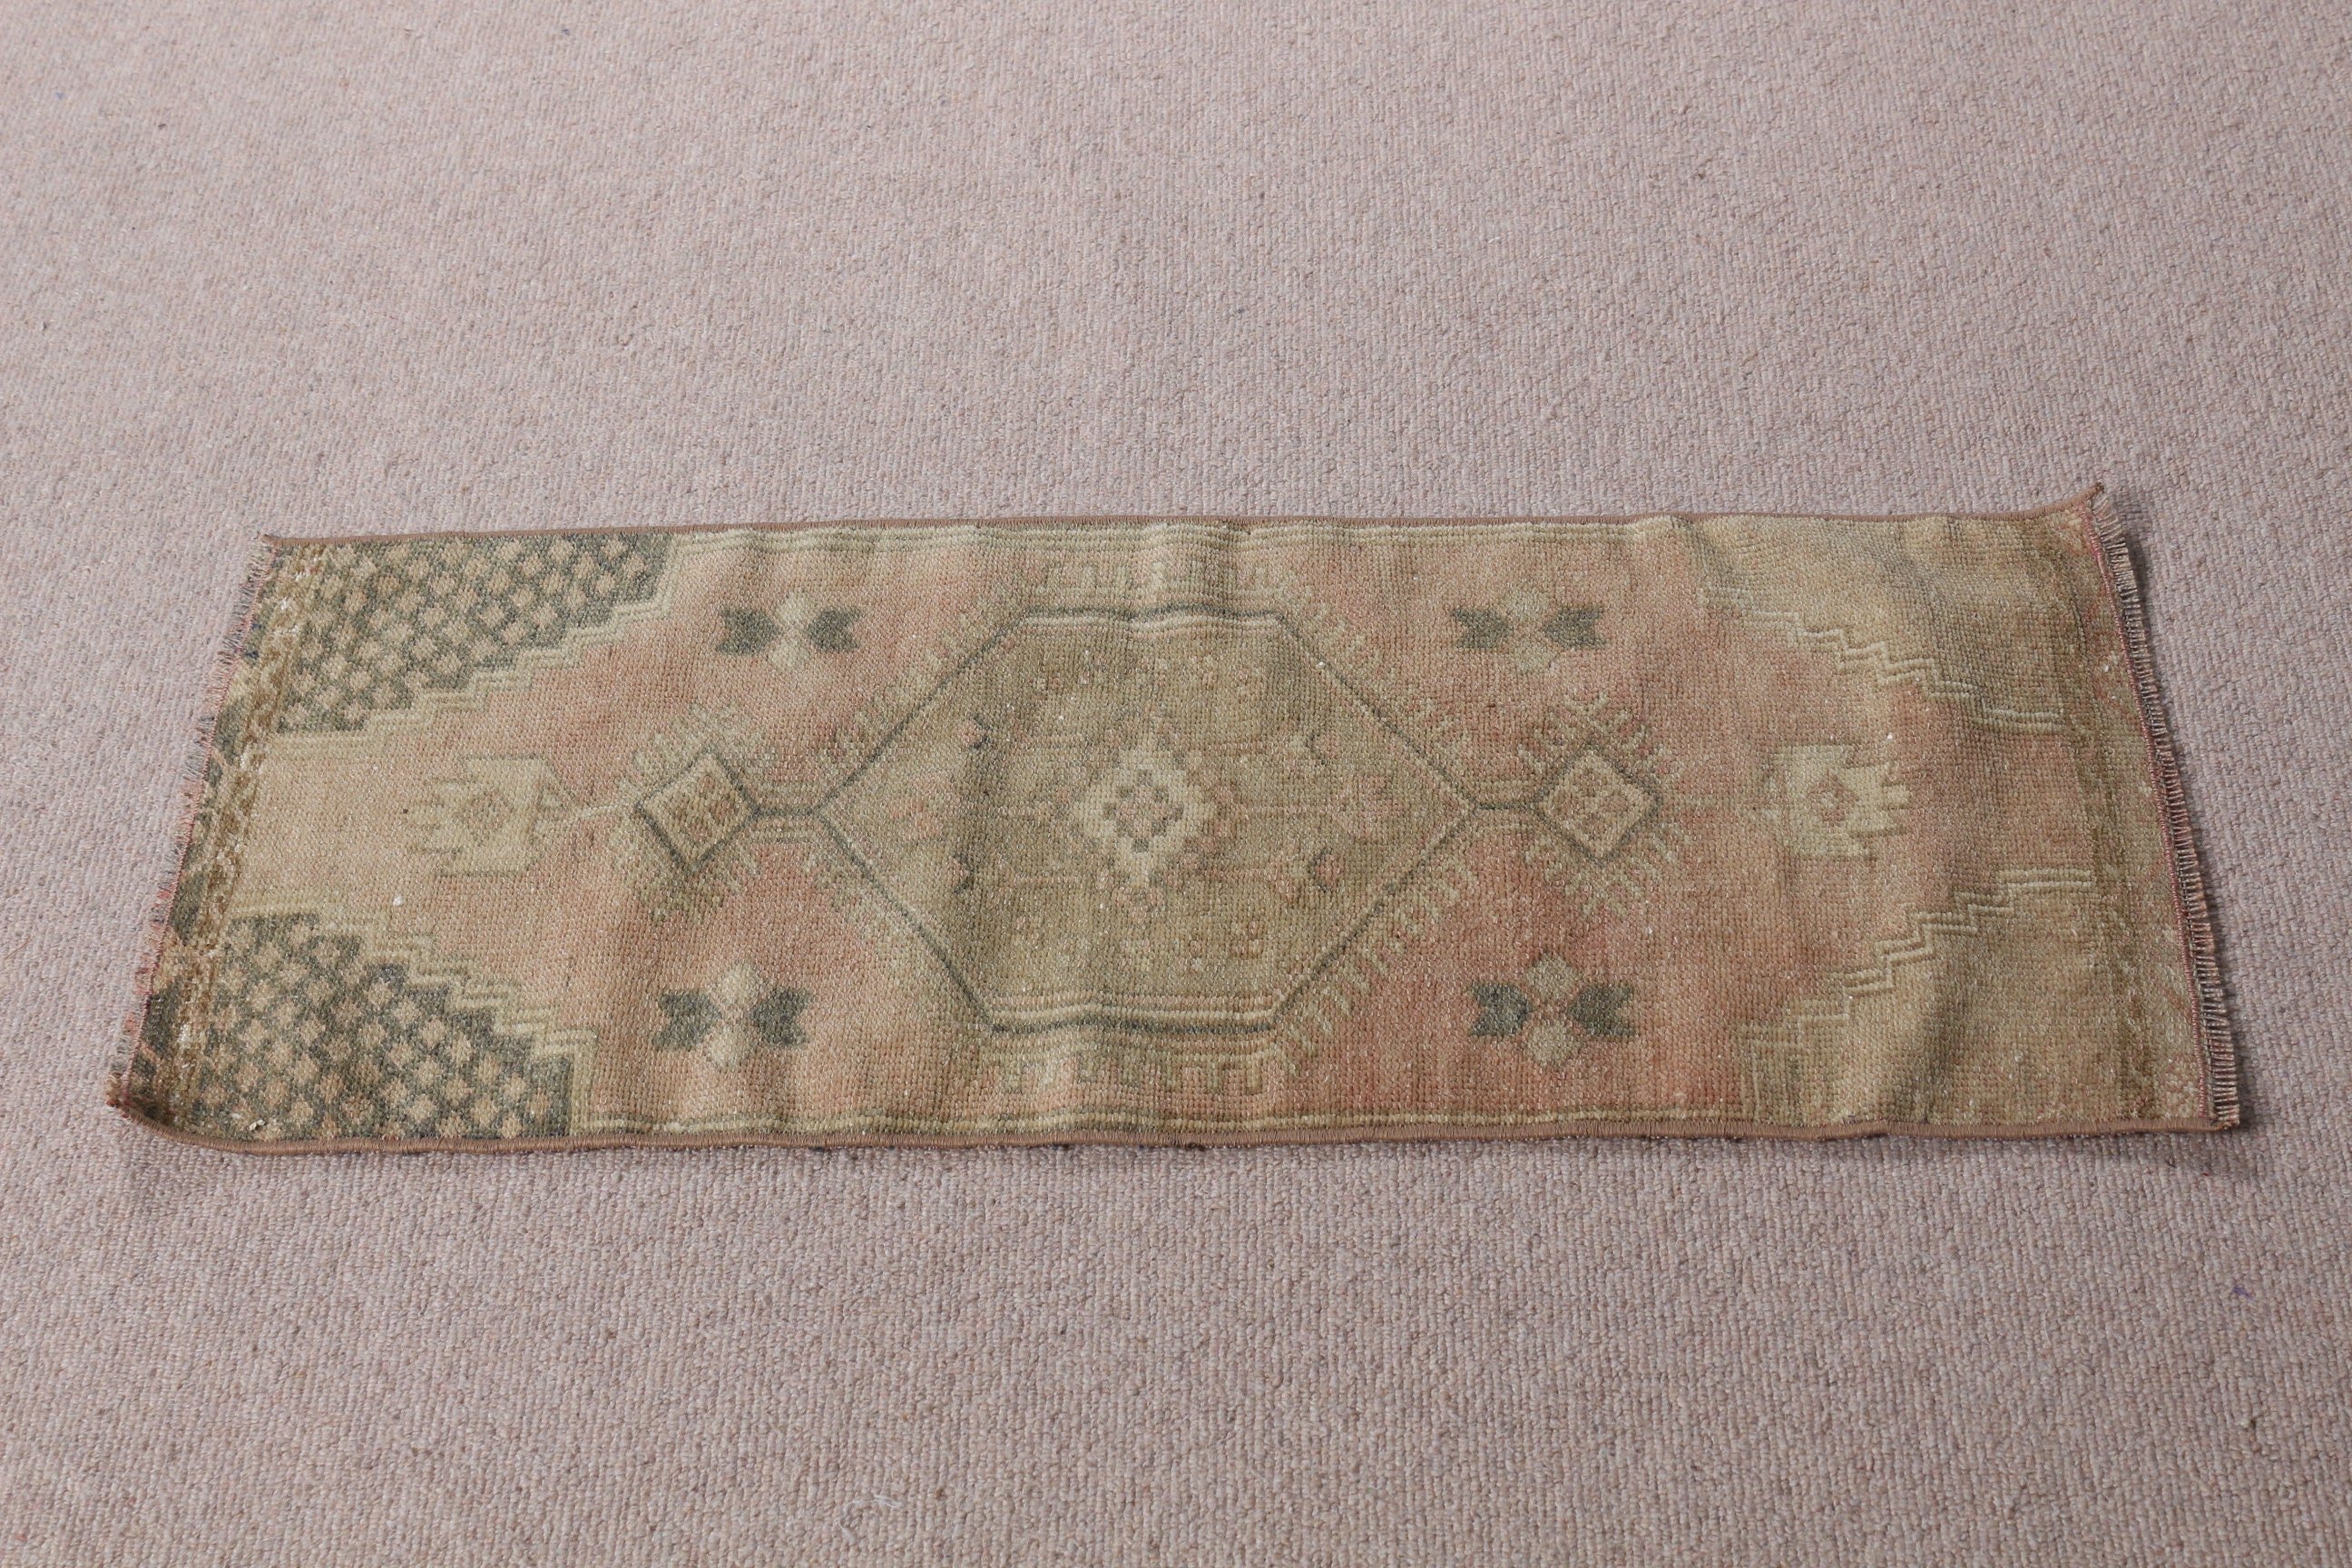 Antique Rug, Turkish Rugs, Rugs for Bath, Door Mat Rug, Brown Oushak Rugs, Kitchen Rug, Vintage Rugs, Oriental Rug, 1.3x3.2 ft Small Rugs